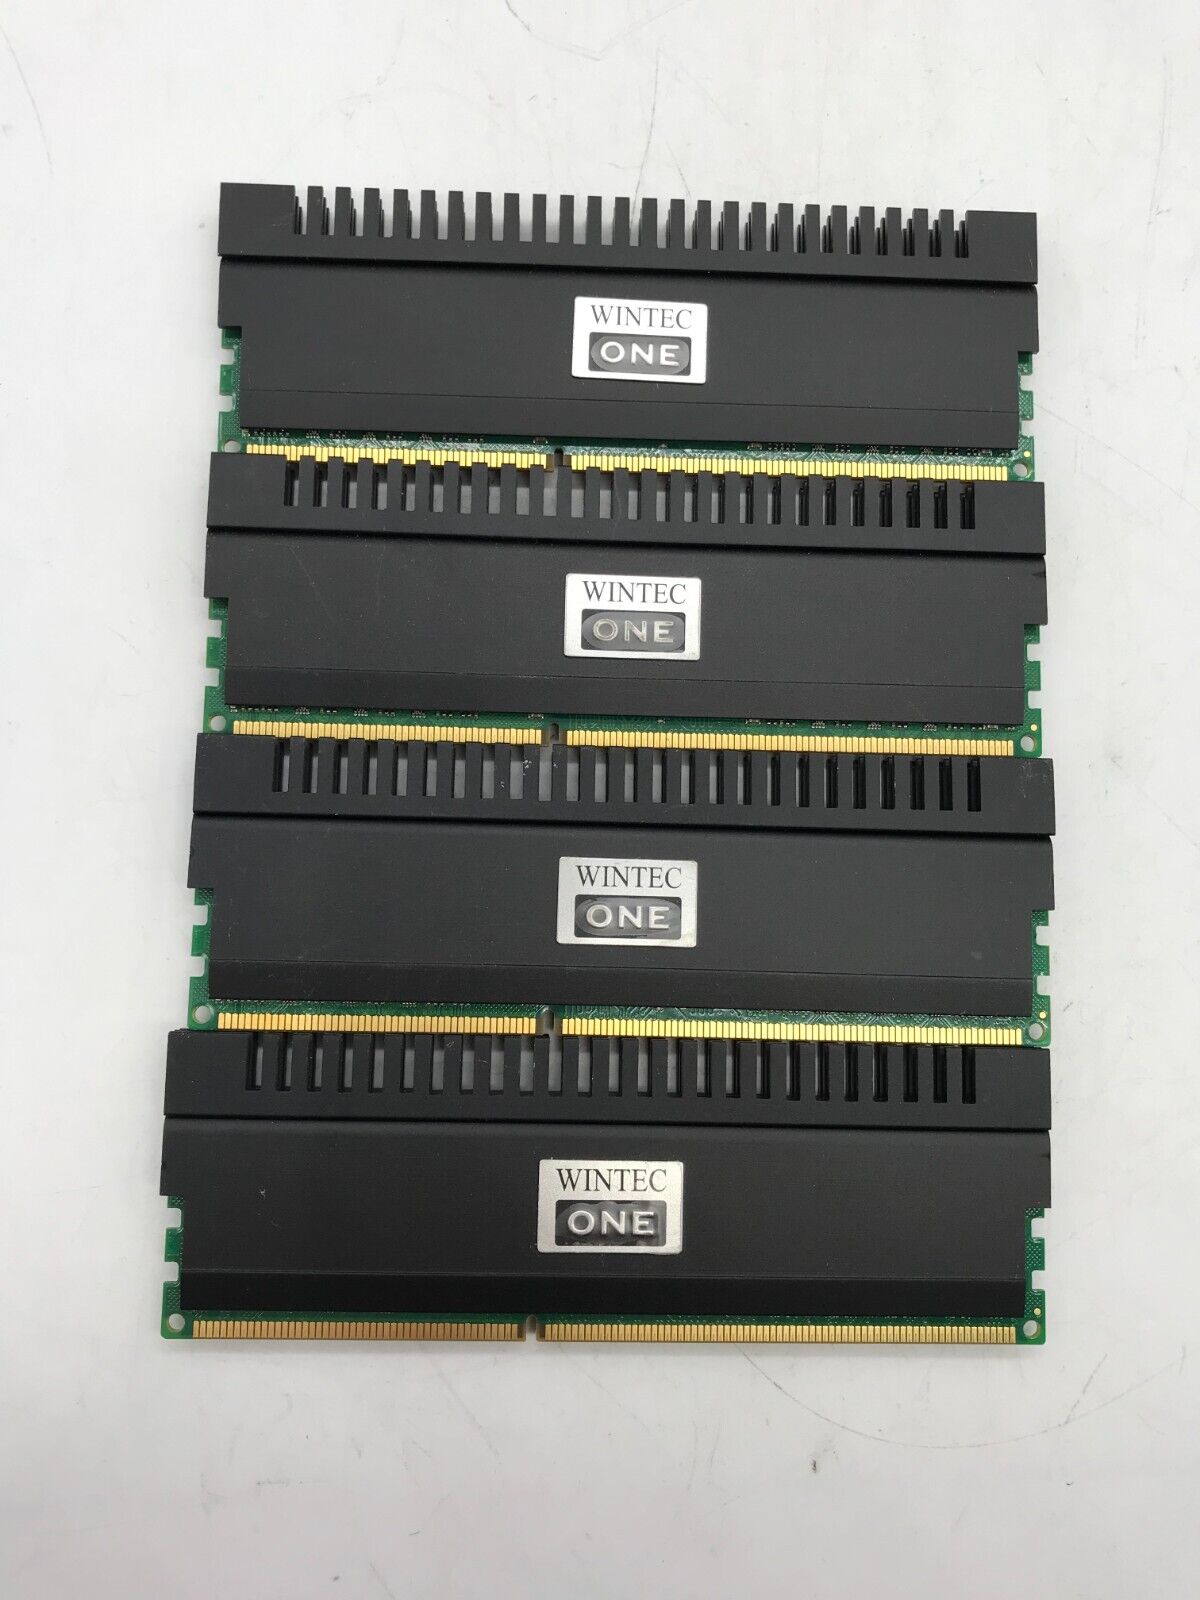 Wintec One 16GB (4x 4GB) DDR3 1600Mhz Desktop RAM 3OH16009U9H-8GK